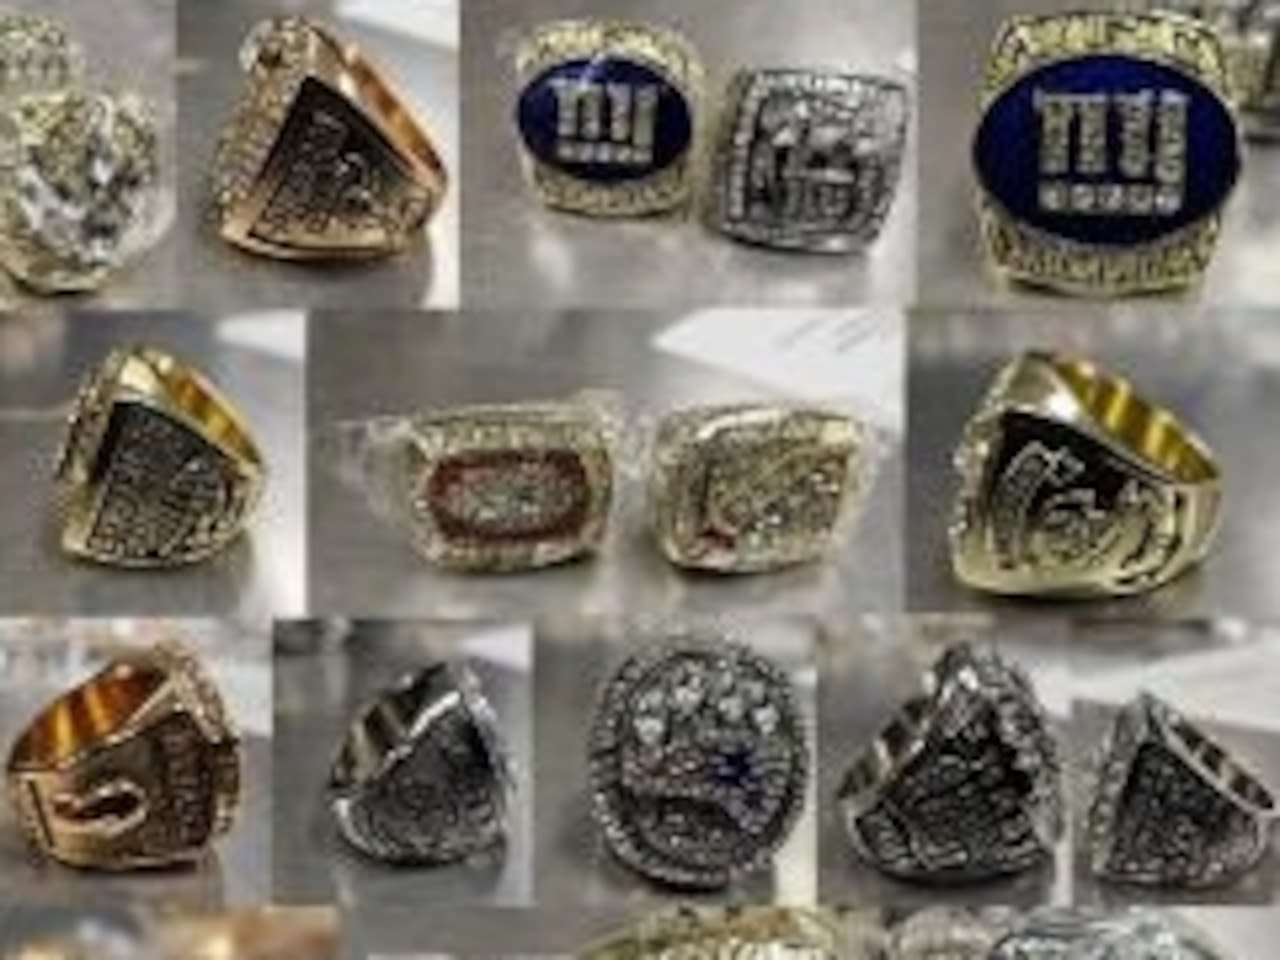 Fake Patriots rings, other NFL, NBA, MLB rings, seized by NY border patrol